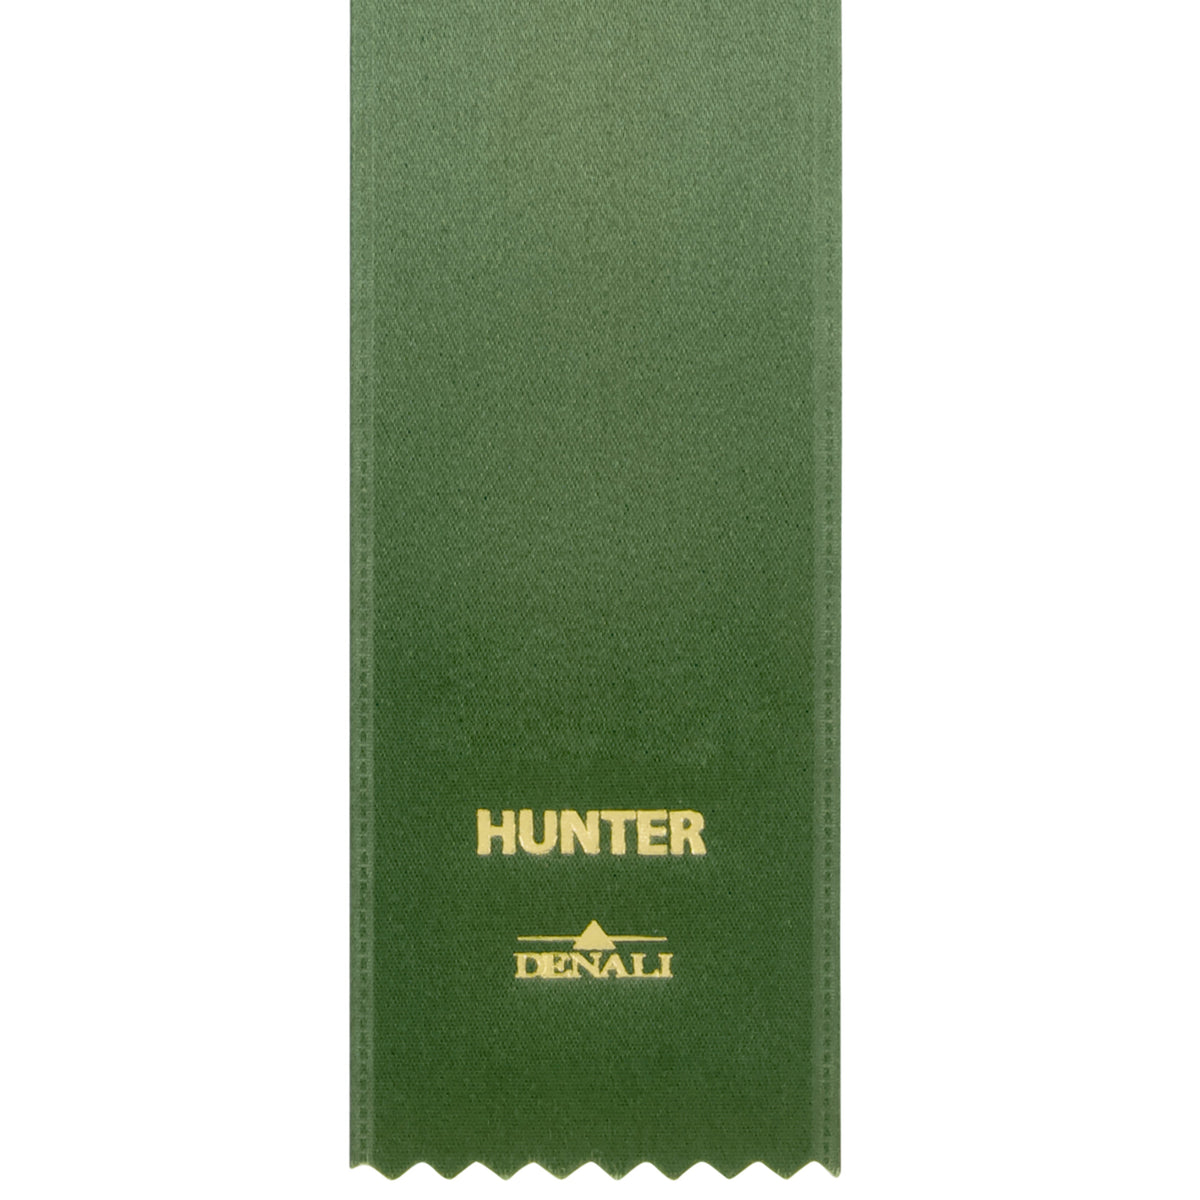 Style 290 Satin Badge Ribbon - Banner Material